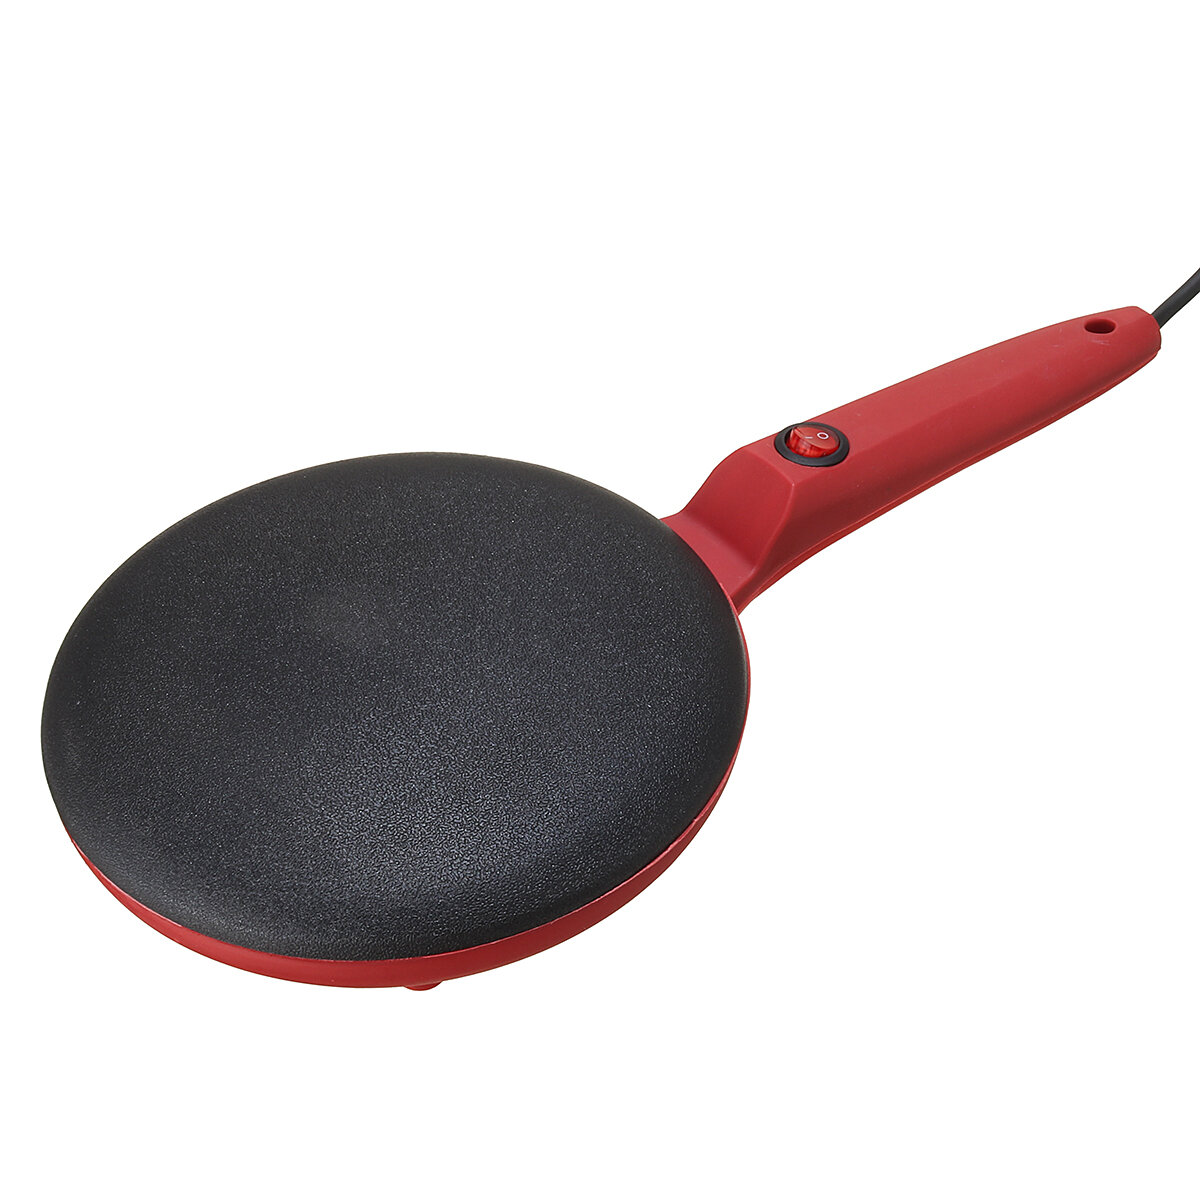 600W 220V Electric Pancake Plate Pan Crepe Maker Non Stick Cooker Baking Dessert Machine Red/Black